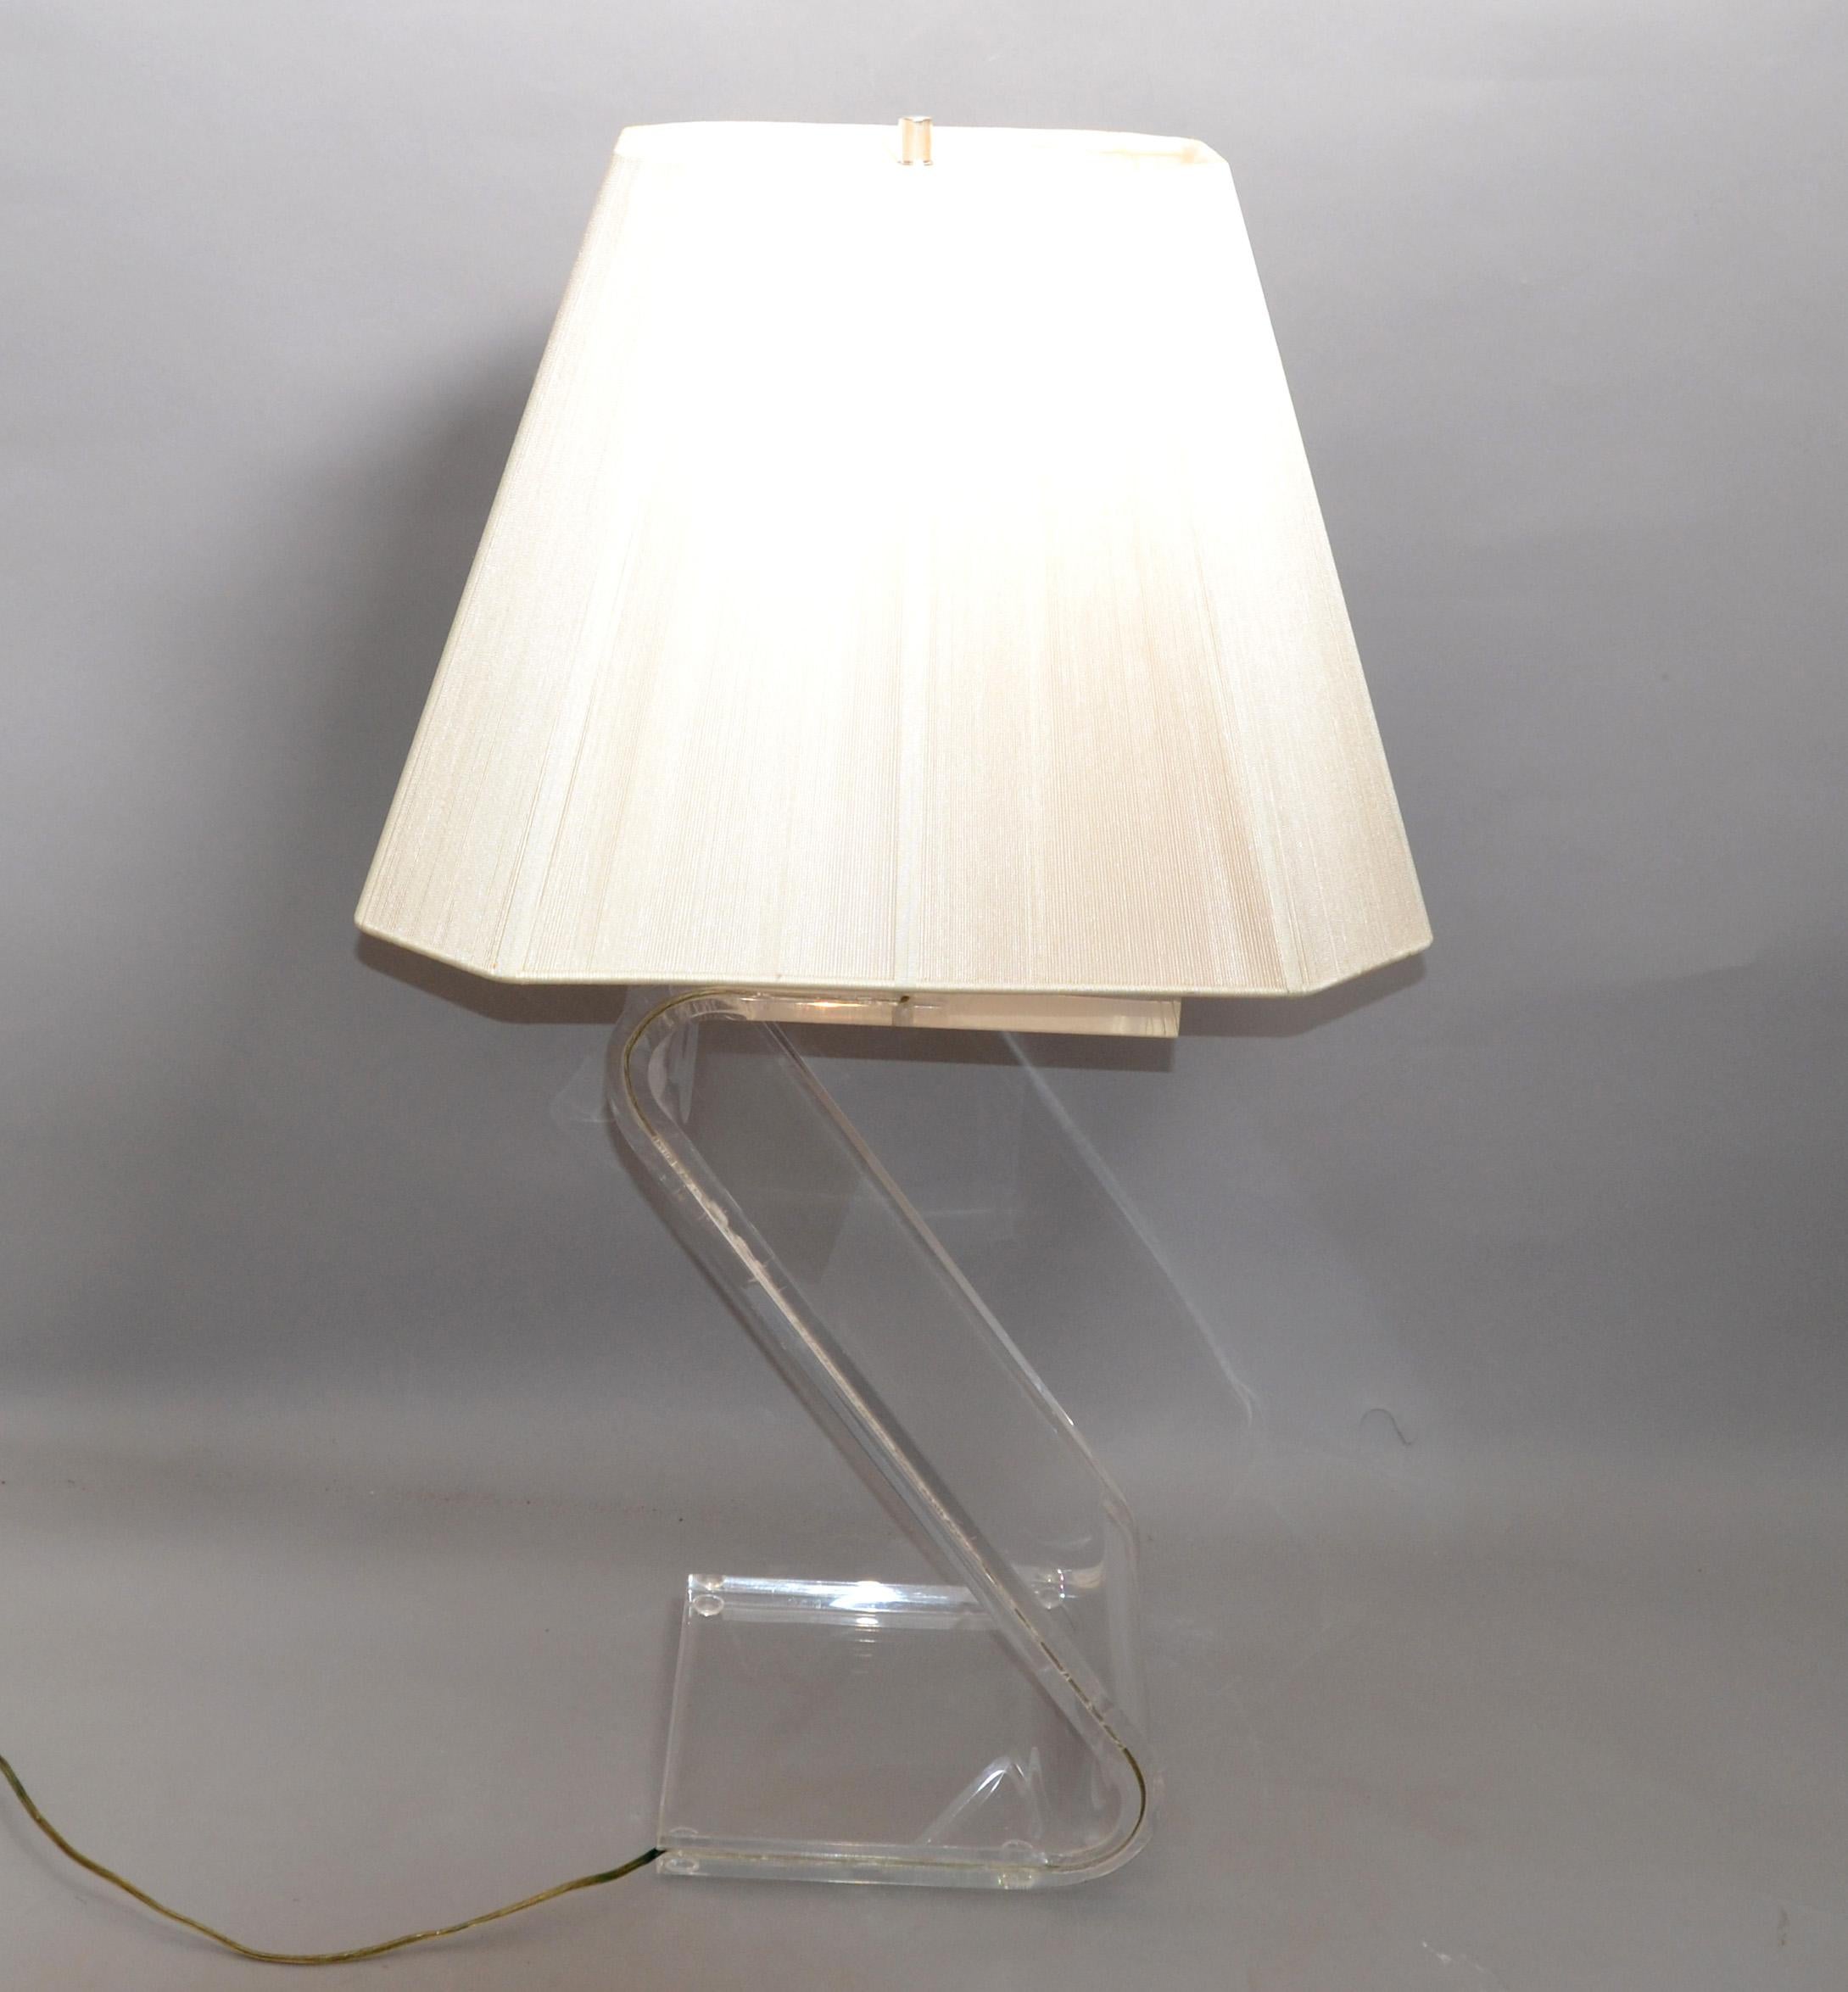 1970s Mid-Century Modern Z Lucite and Chrome Floor Lamp Plissé Shade For Sale 1